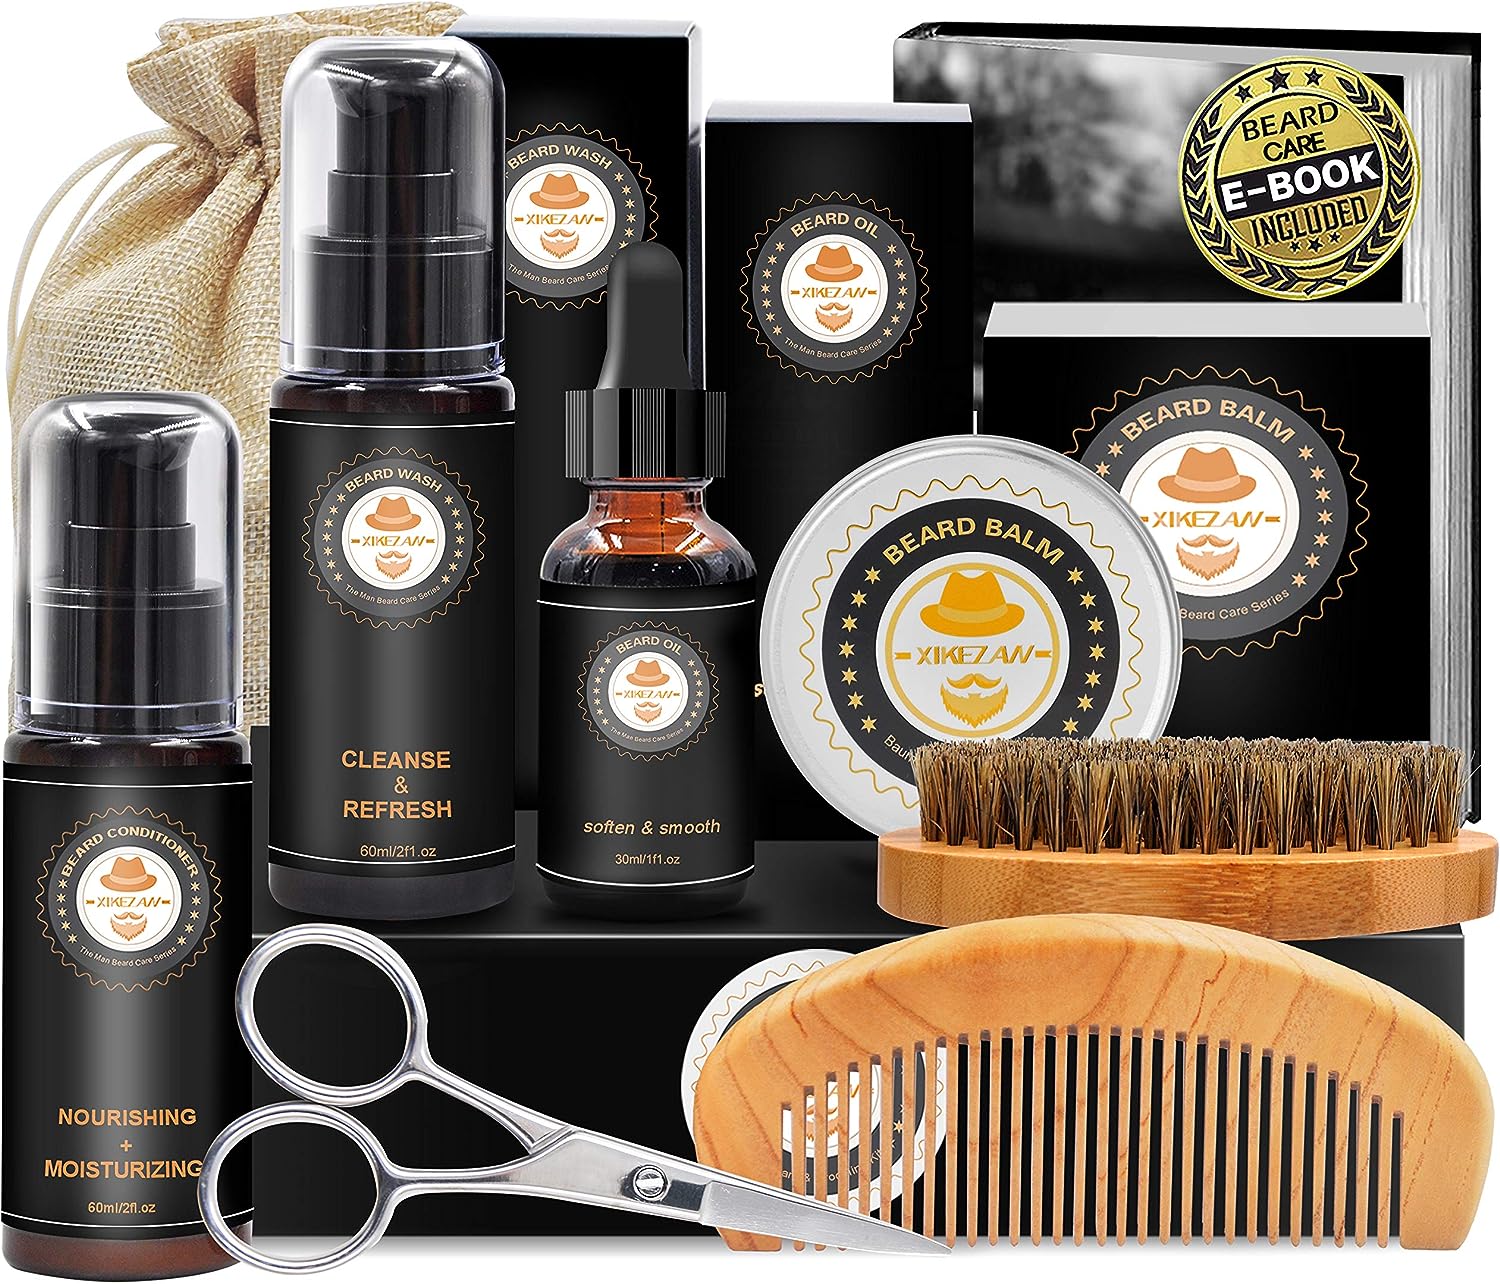 Upgraded Beard Grooming Kit w/Beard Baubles,Beard Shaper,Beard Growth Oil,Beard Balm,Beard Shampoo/Wash,Beard Brush,Beard Comb,Beard Scissors,Storage Bag,E-Book,Beard Care Grooming Daddy Gifts for Men